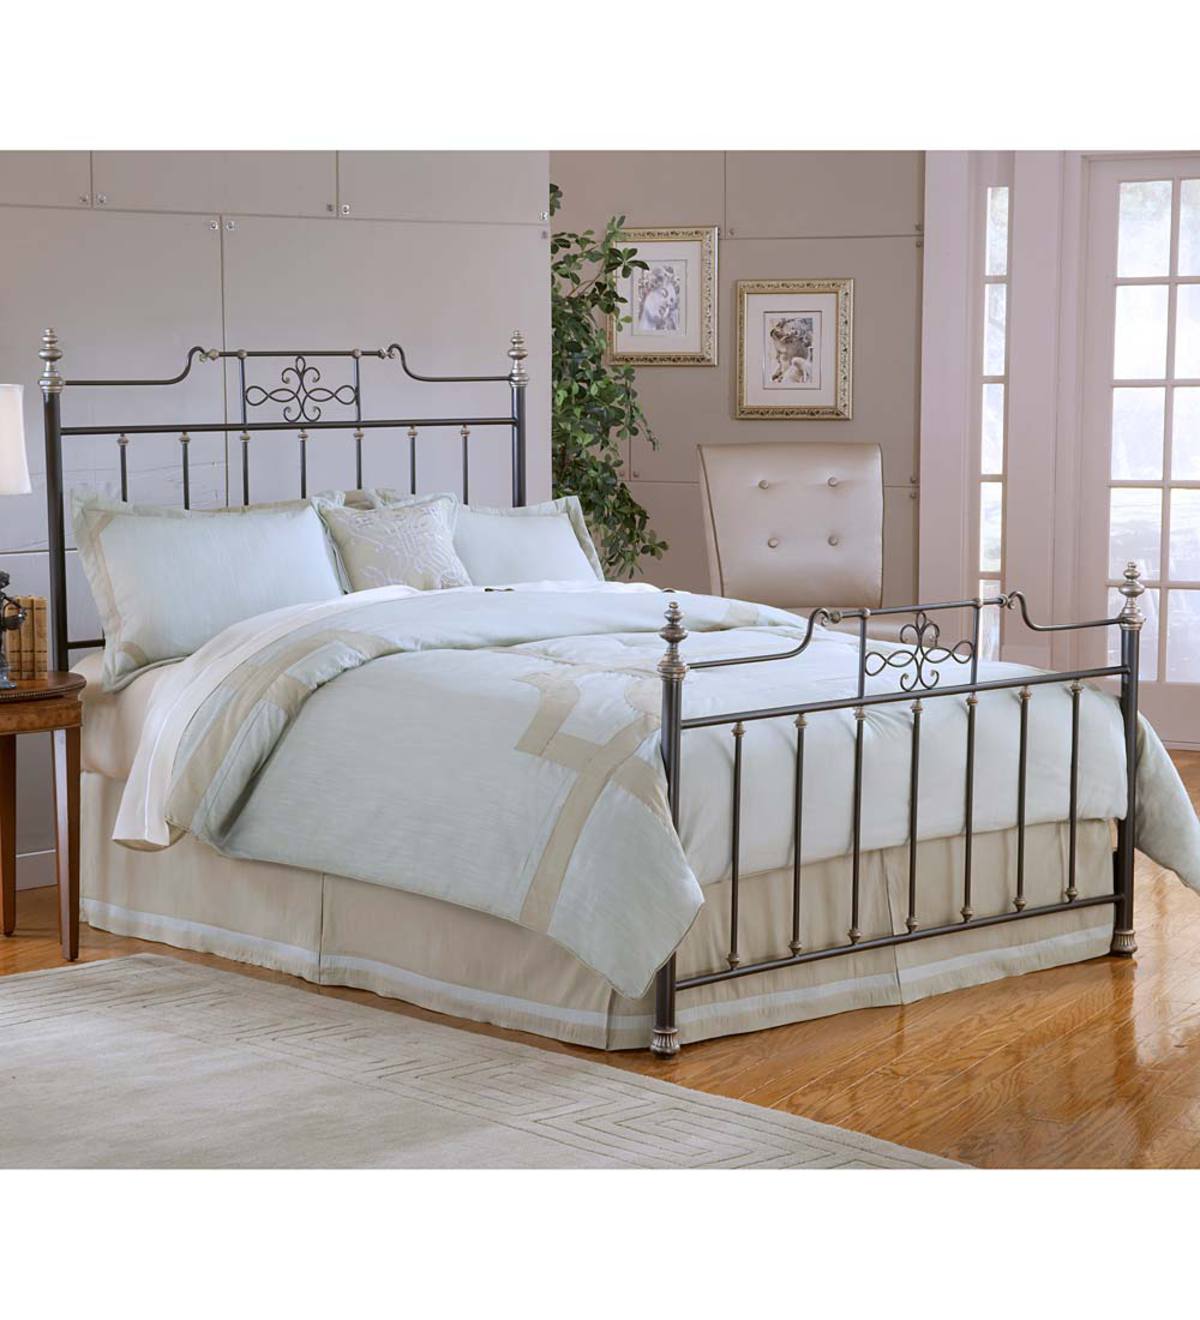 Abigale Metal Full Bed Set